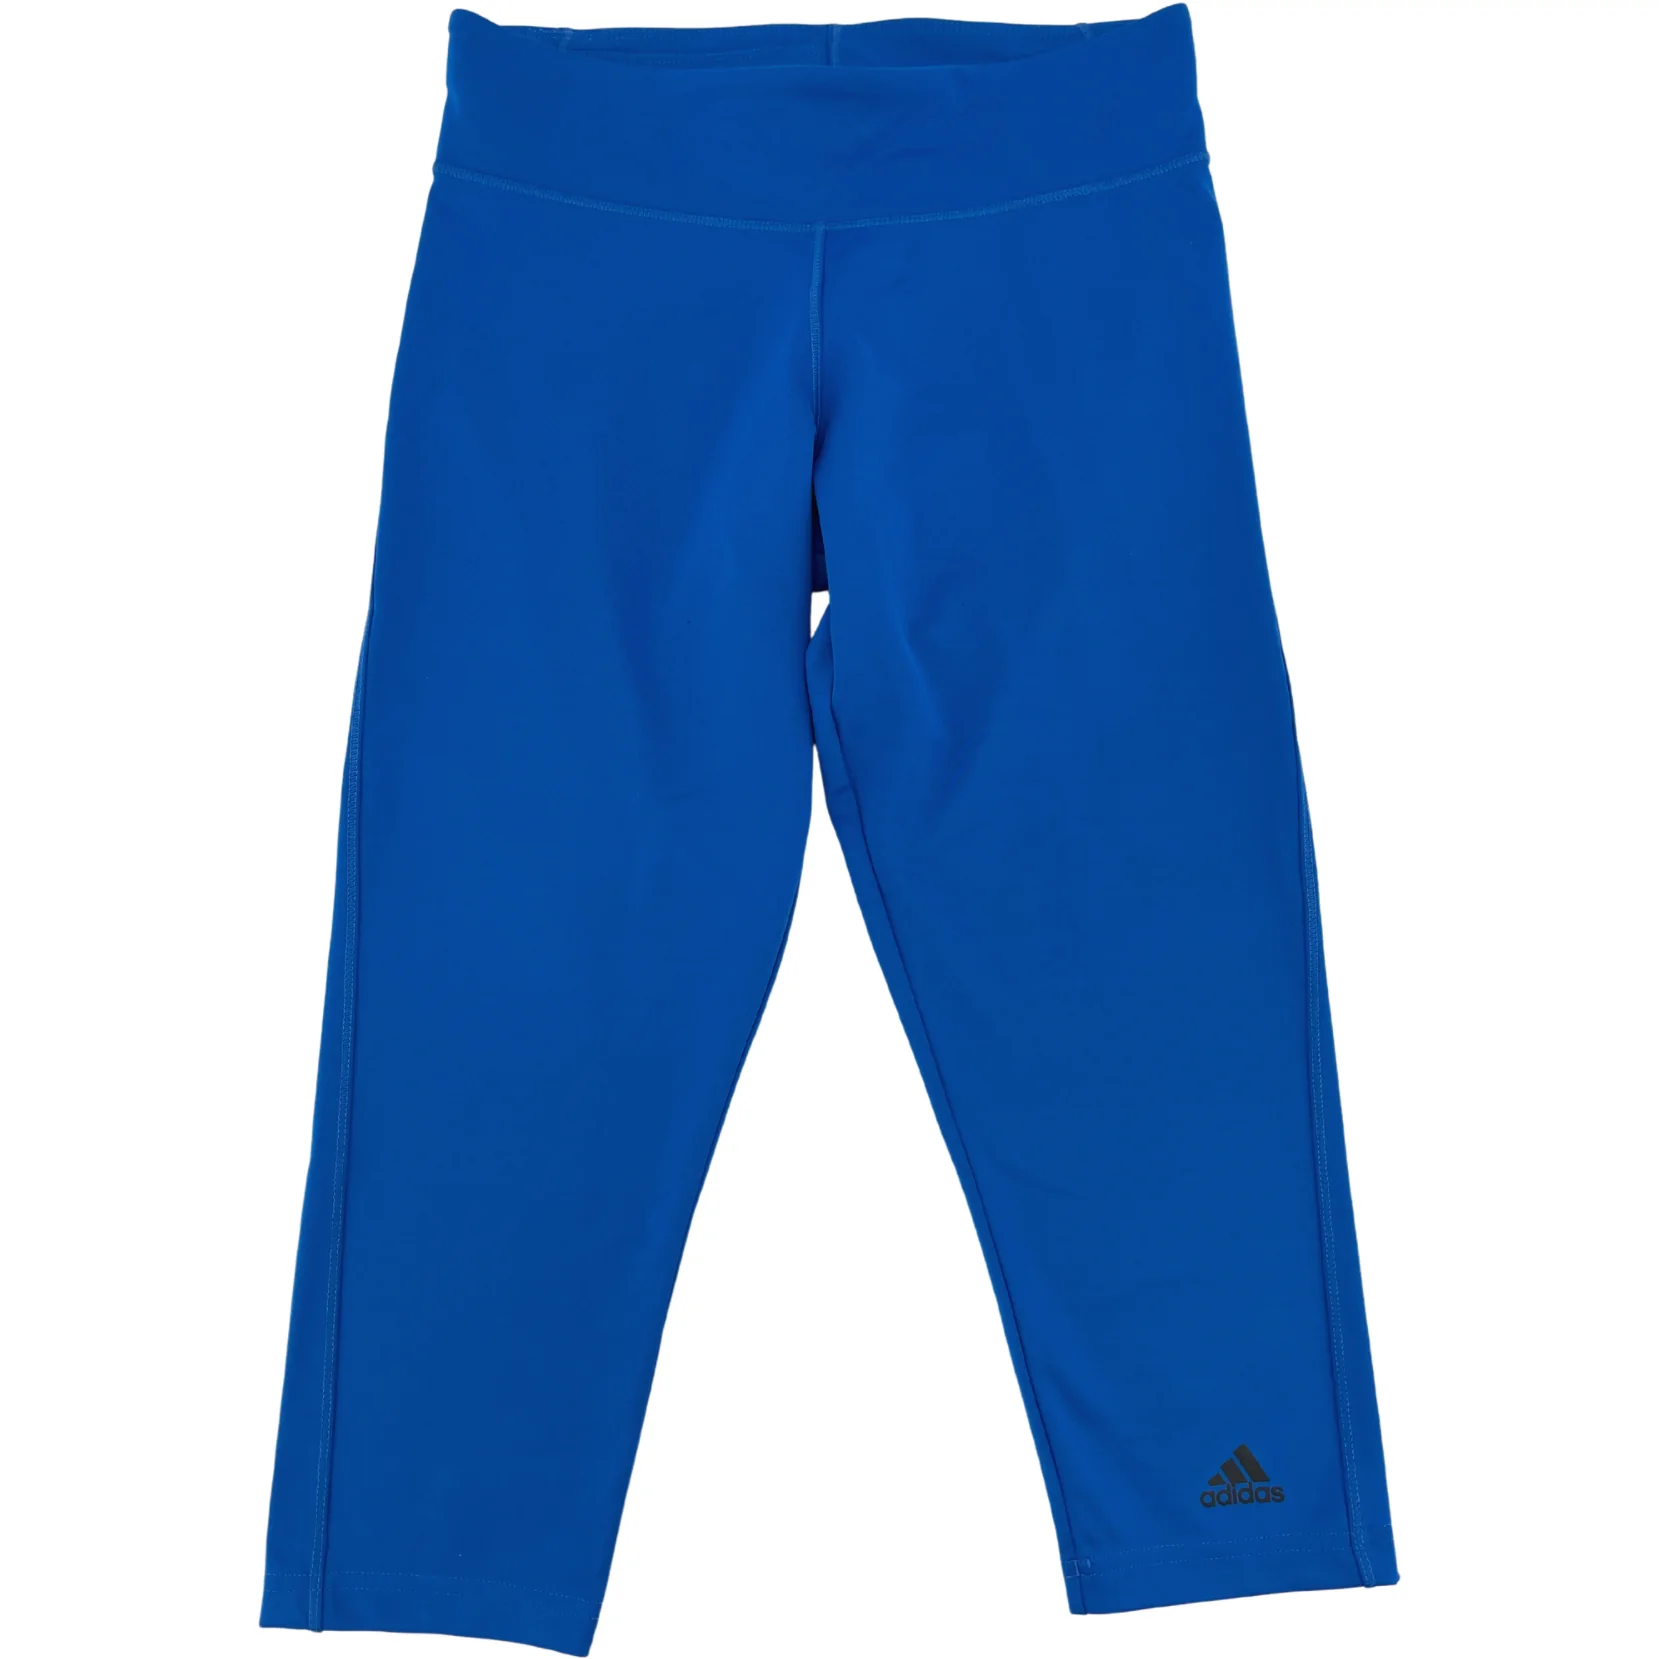 Adidas Women's Cropped Leggings / Ladies Capris / Blue / Size Small